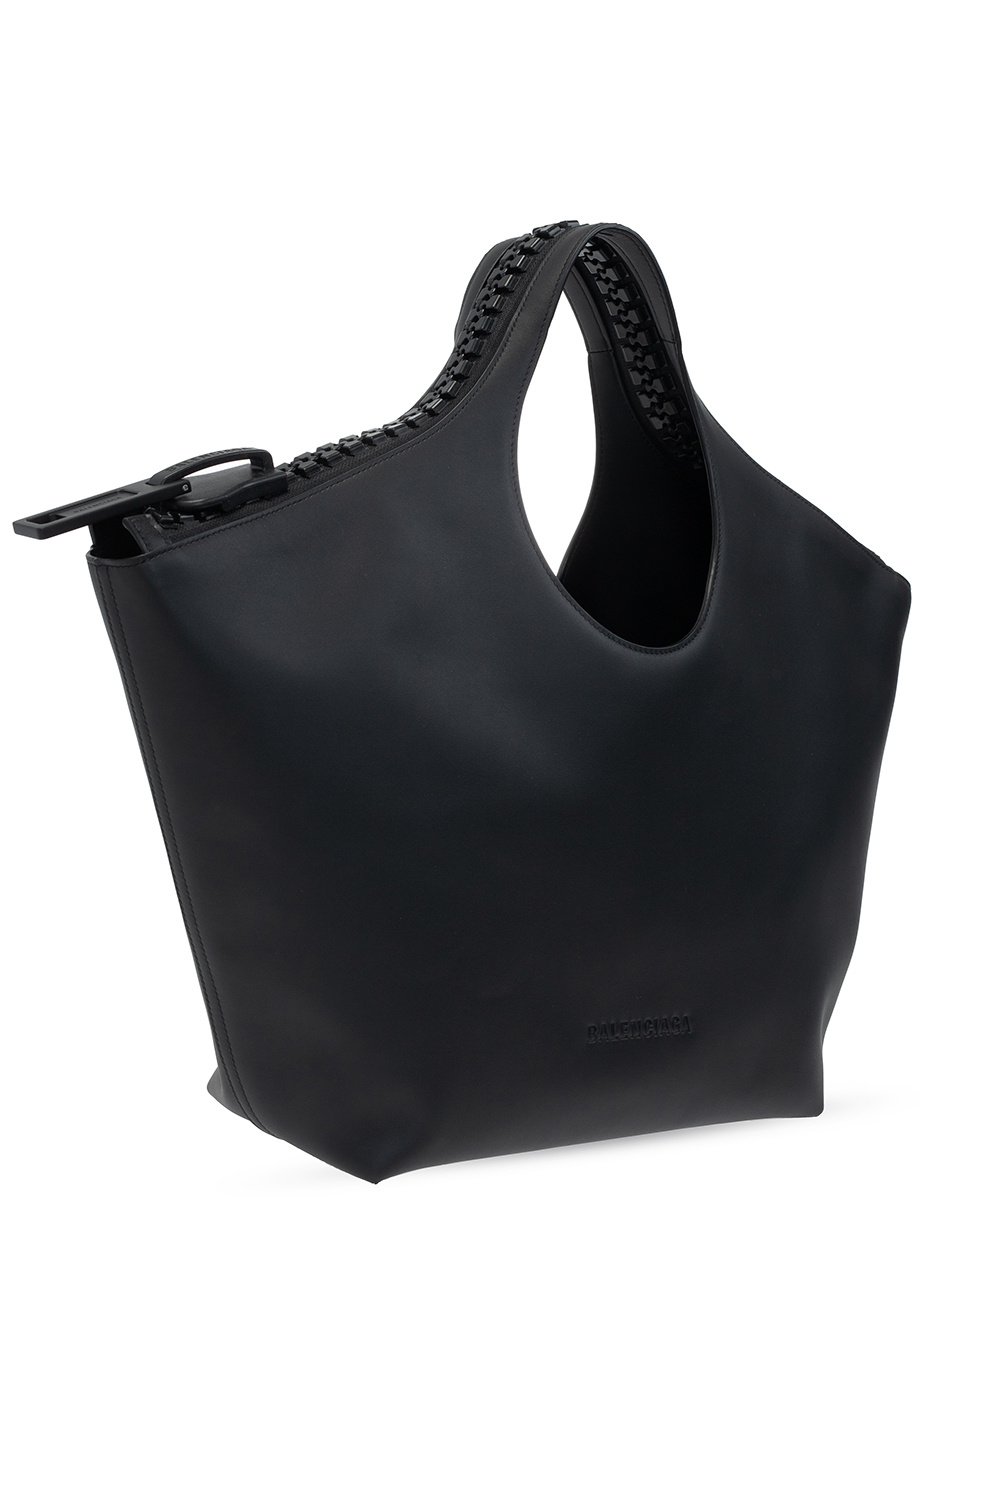 Balenciaga ‘Megazip’ hand bag Marni with logo